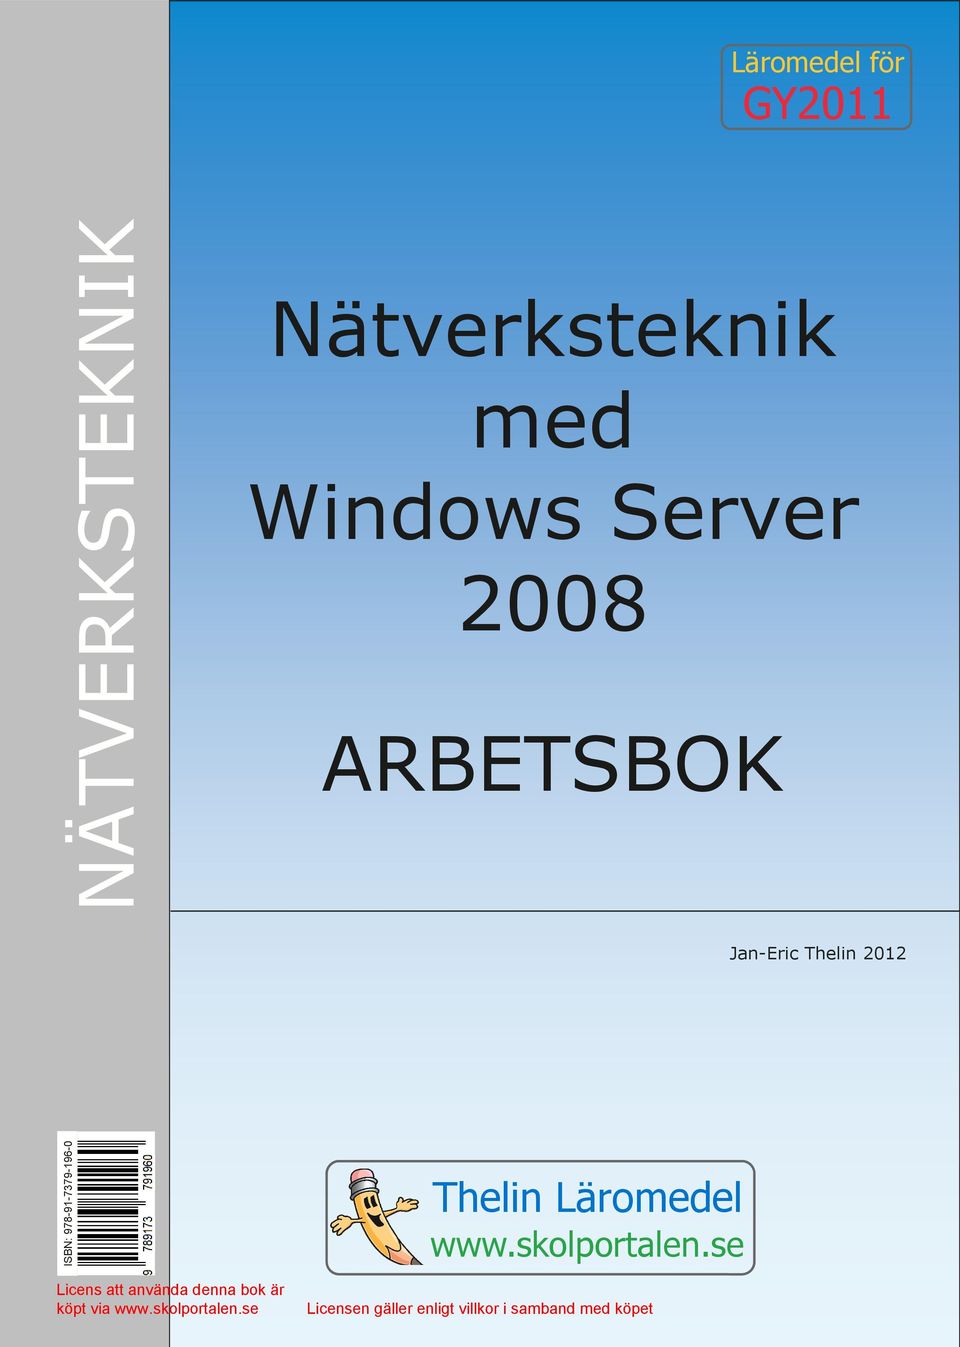 ARBETSBOK Jan-Eric Thelin 2012 ISBN: